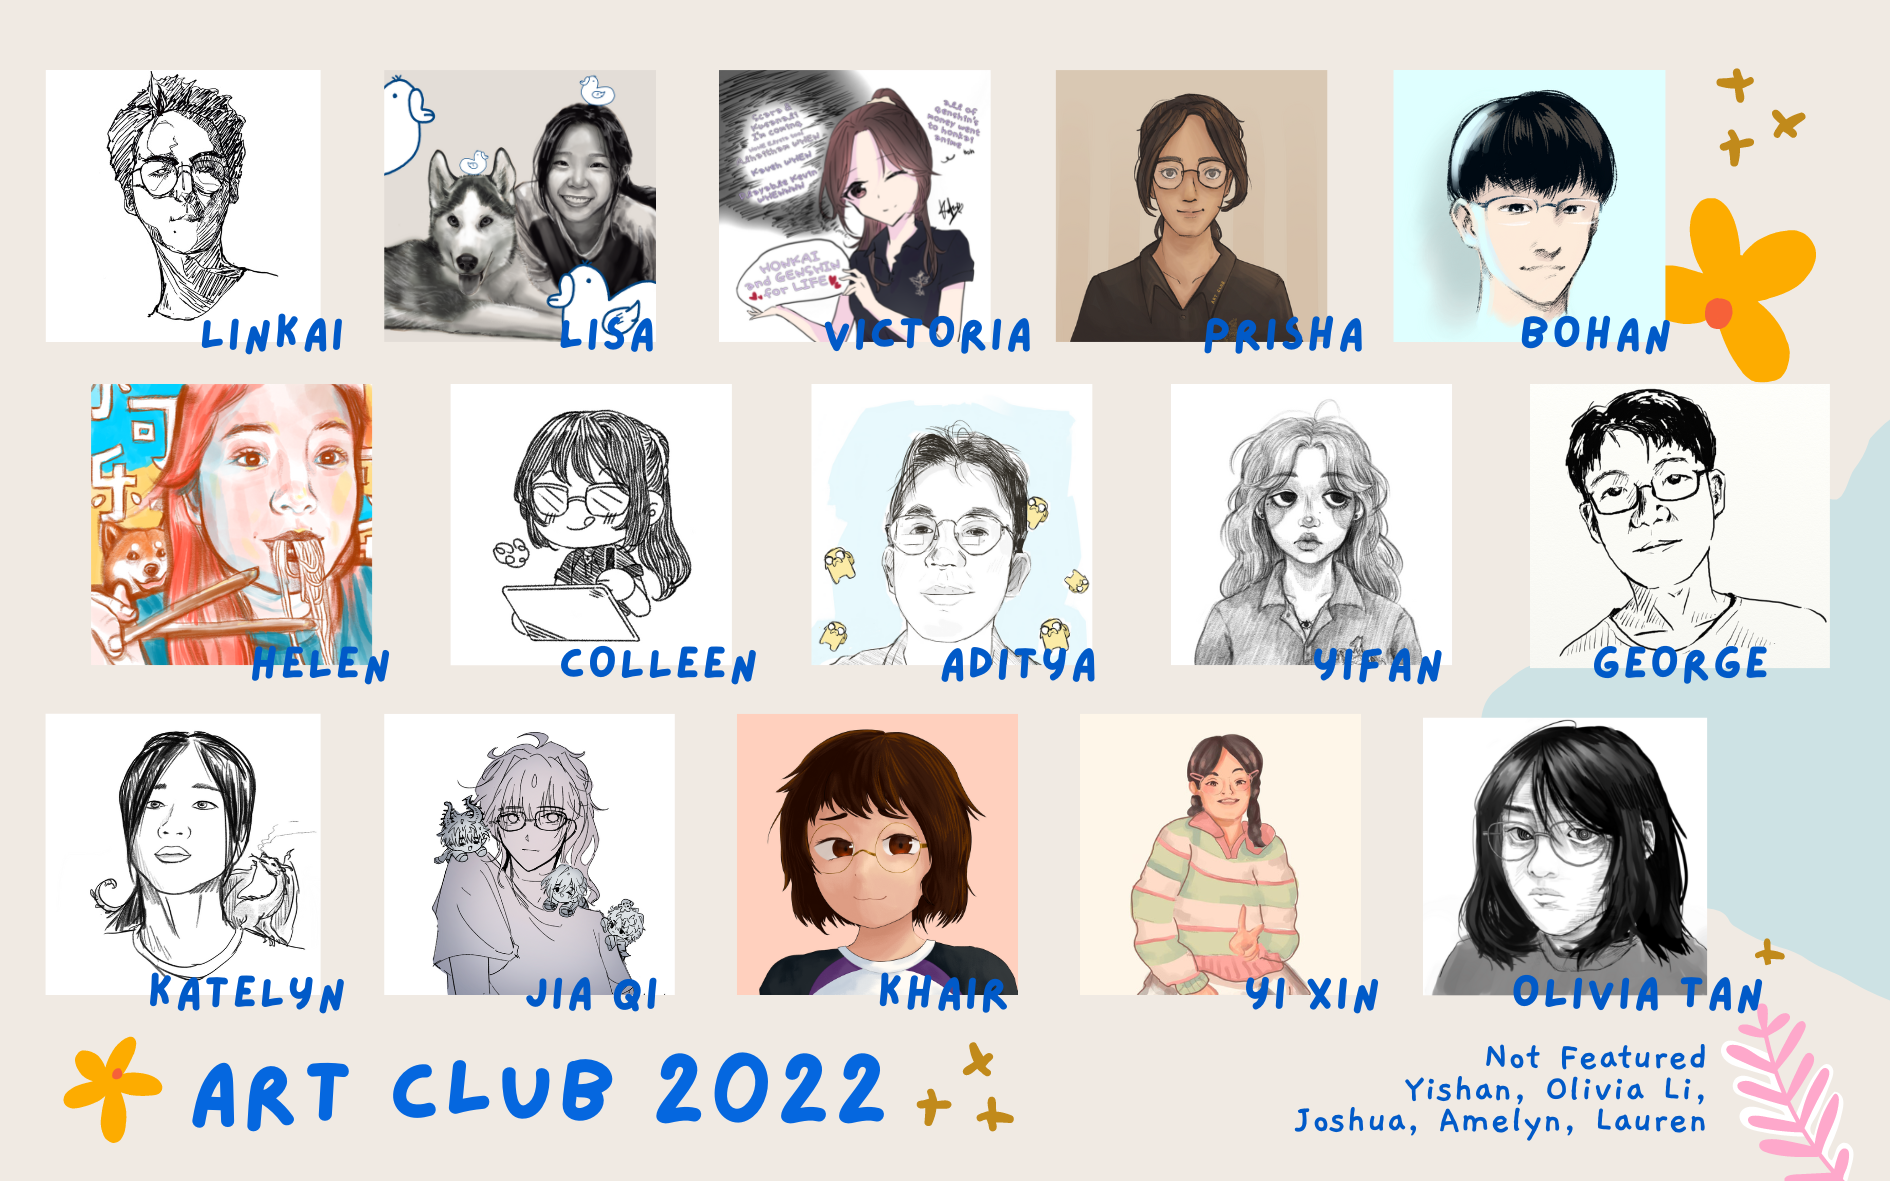 Art club 2022